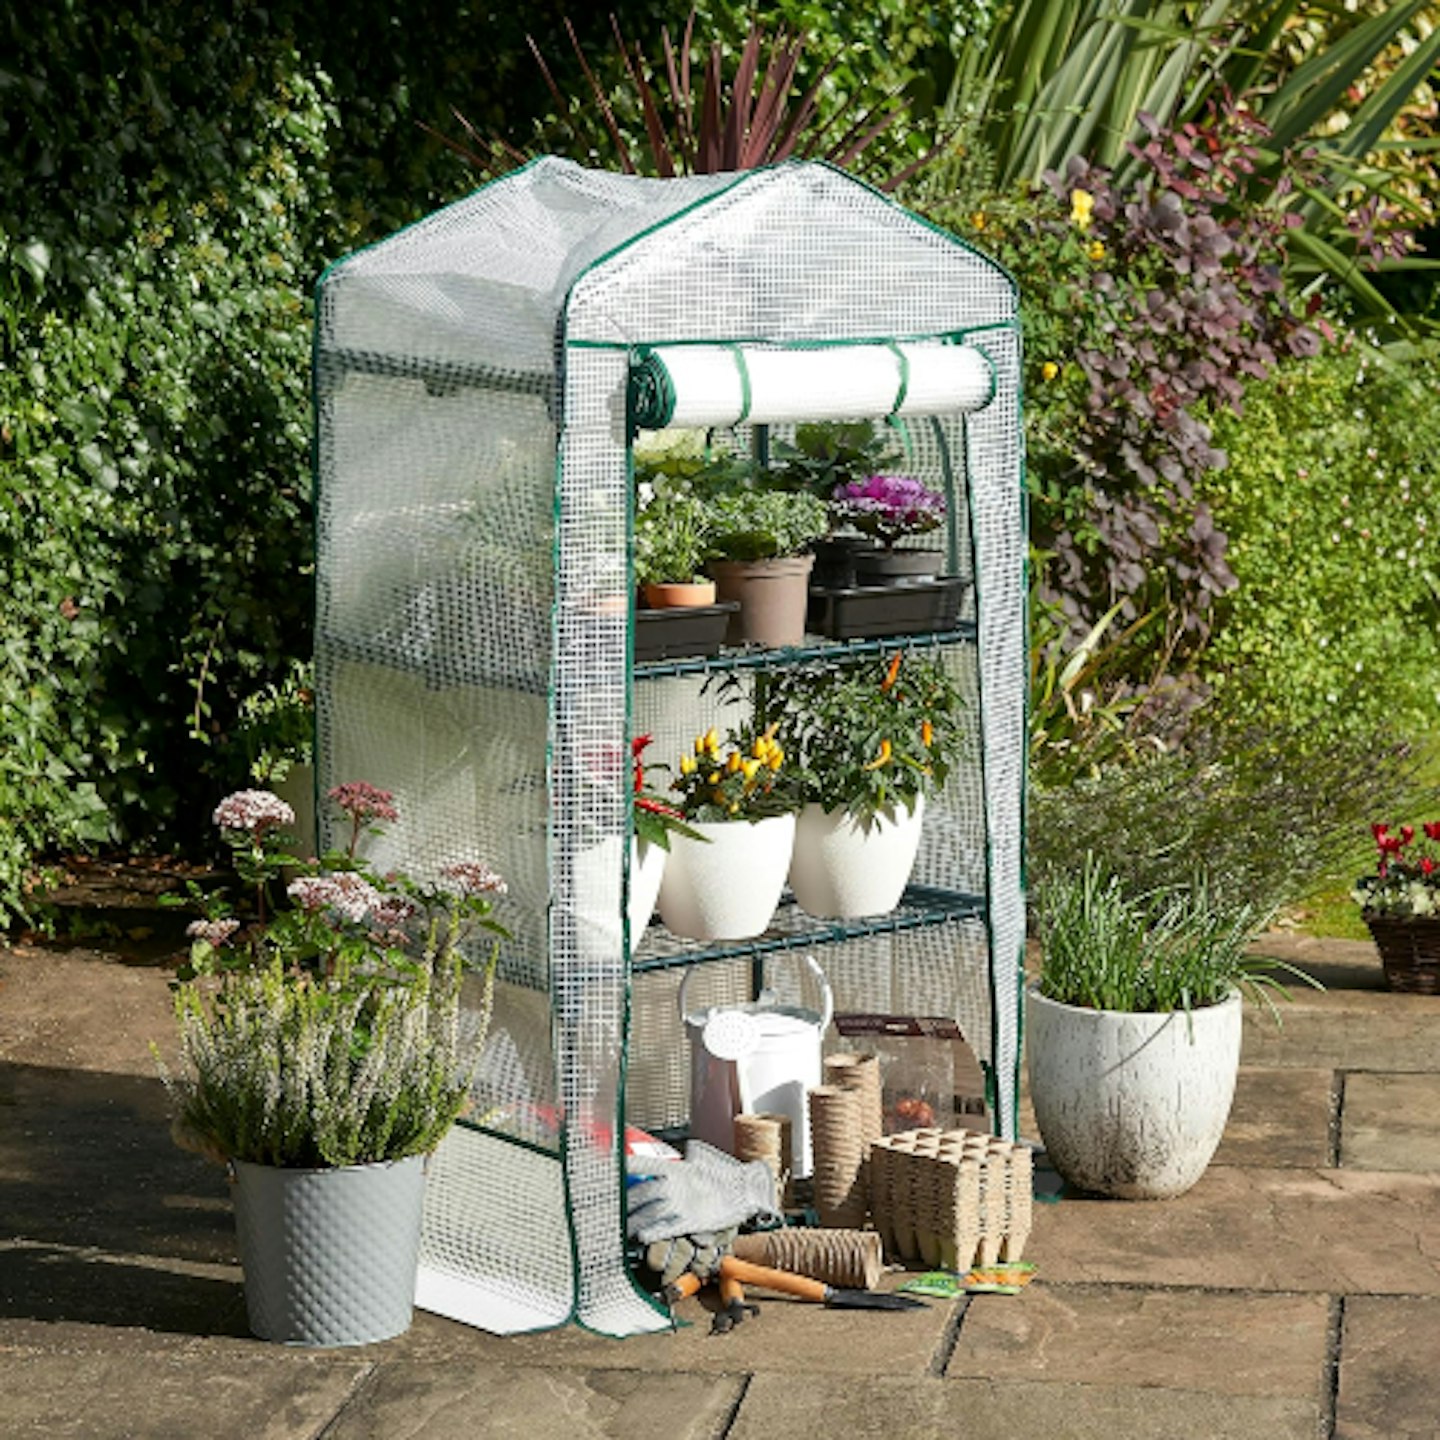 Bramble plastic greenhouse 